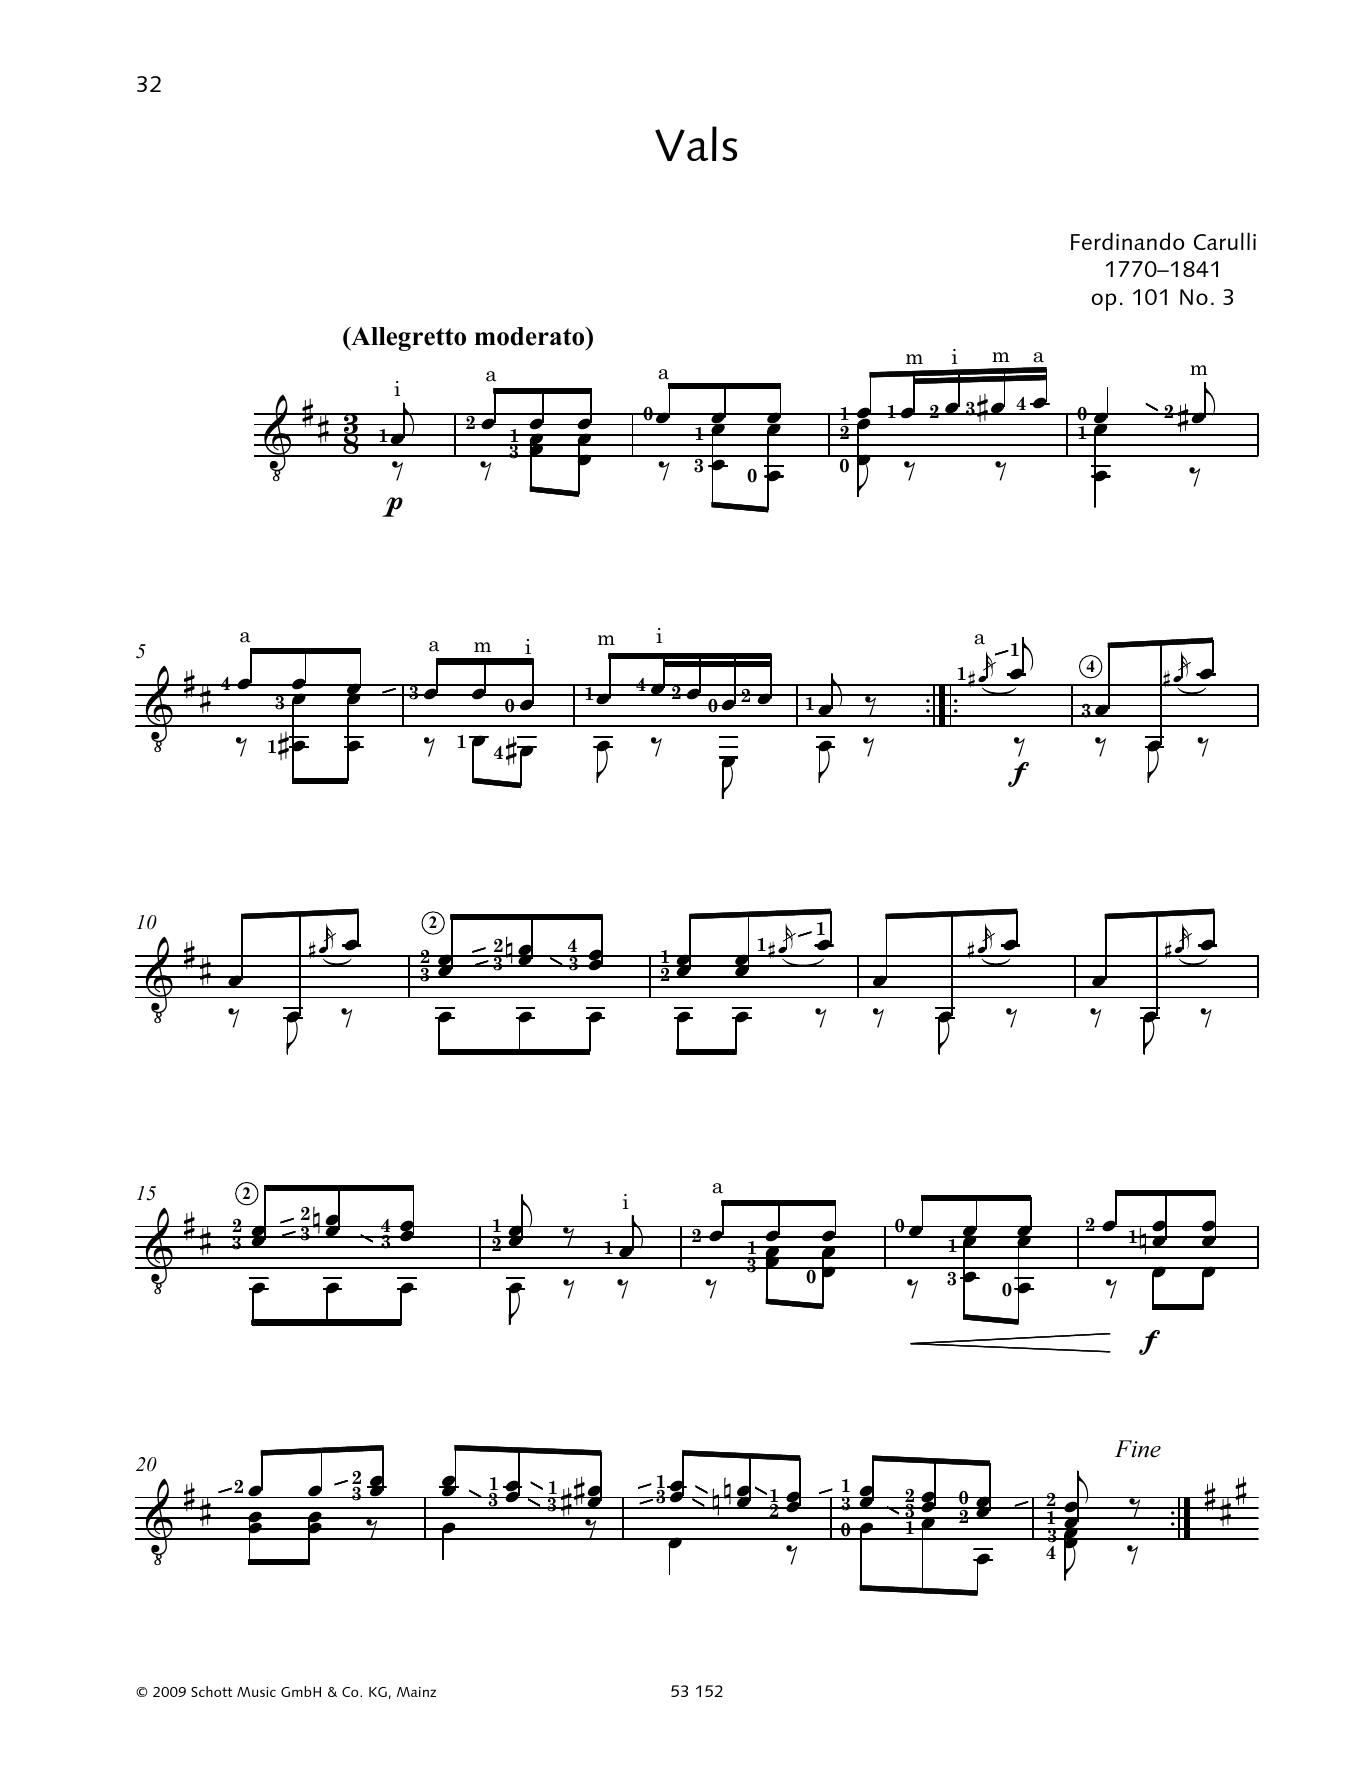 Download Ferdinando Carulli Vals Sheet Music